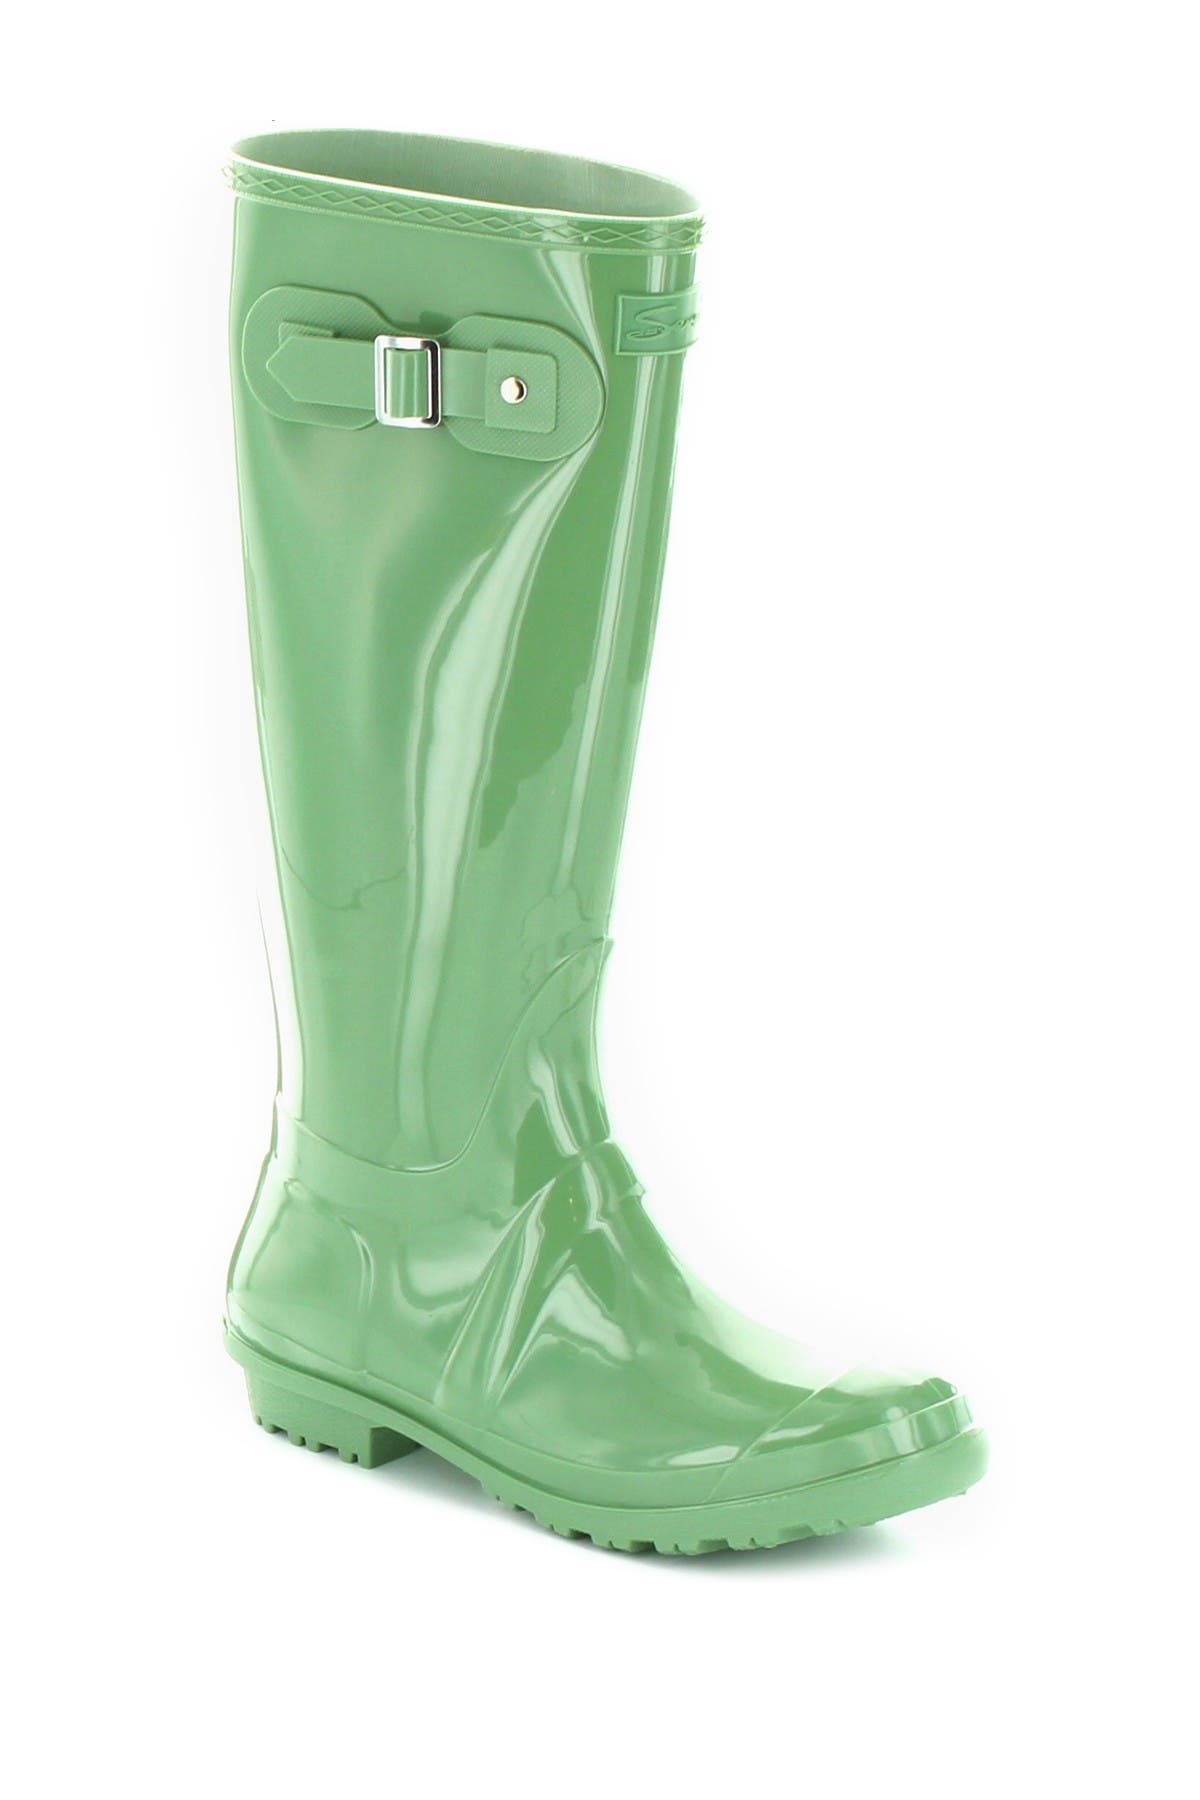 seven rain boots